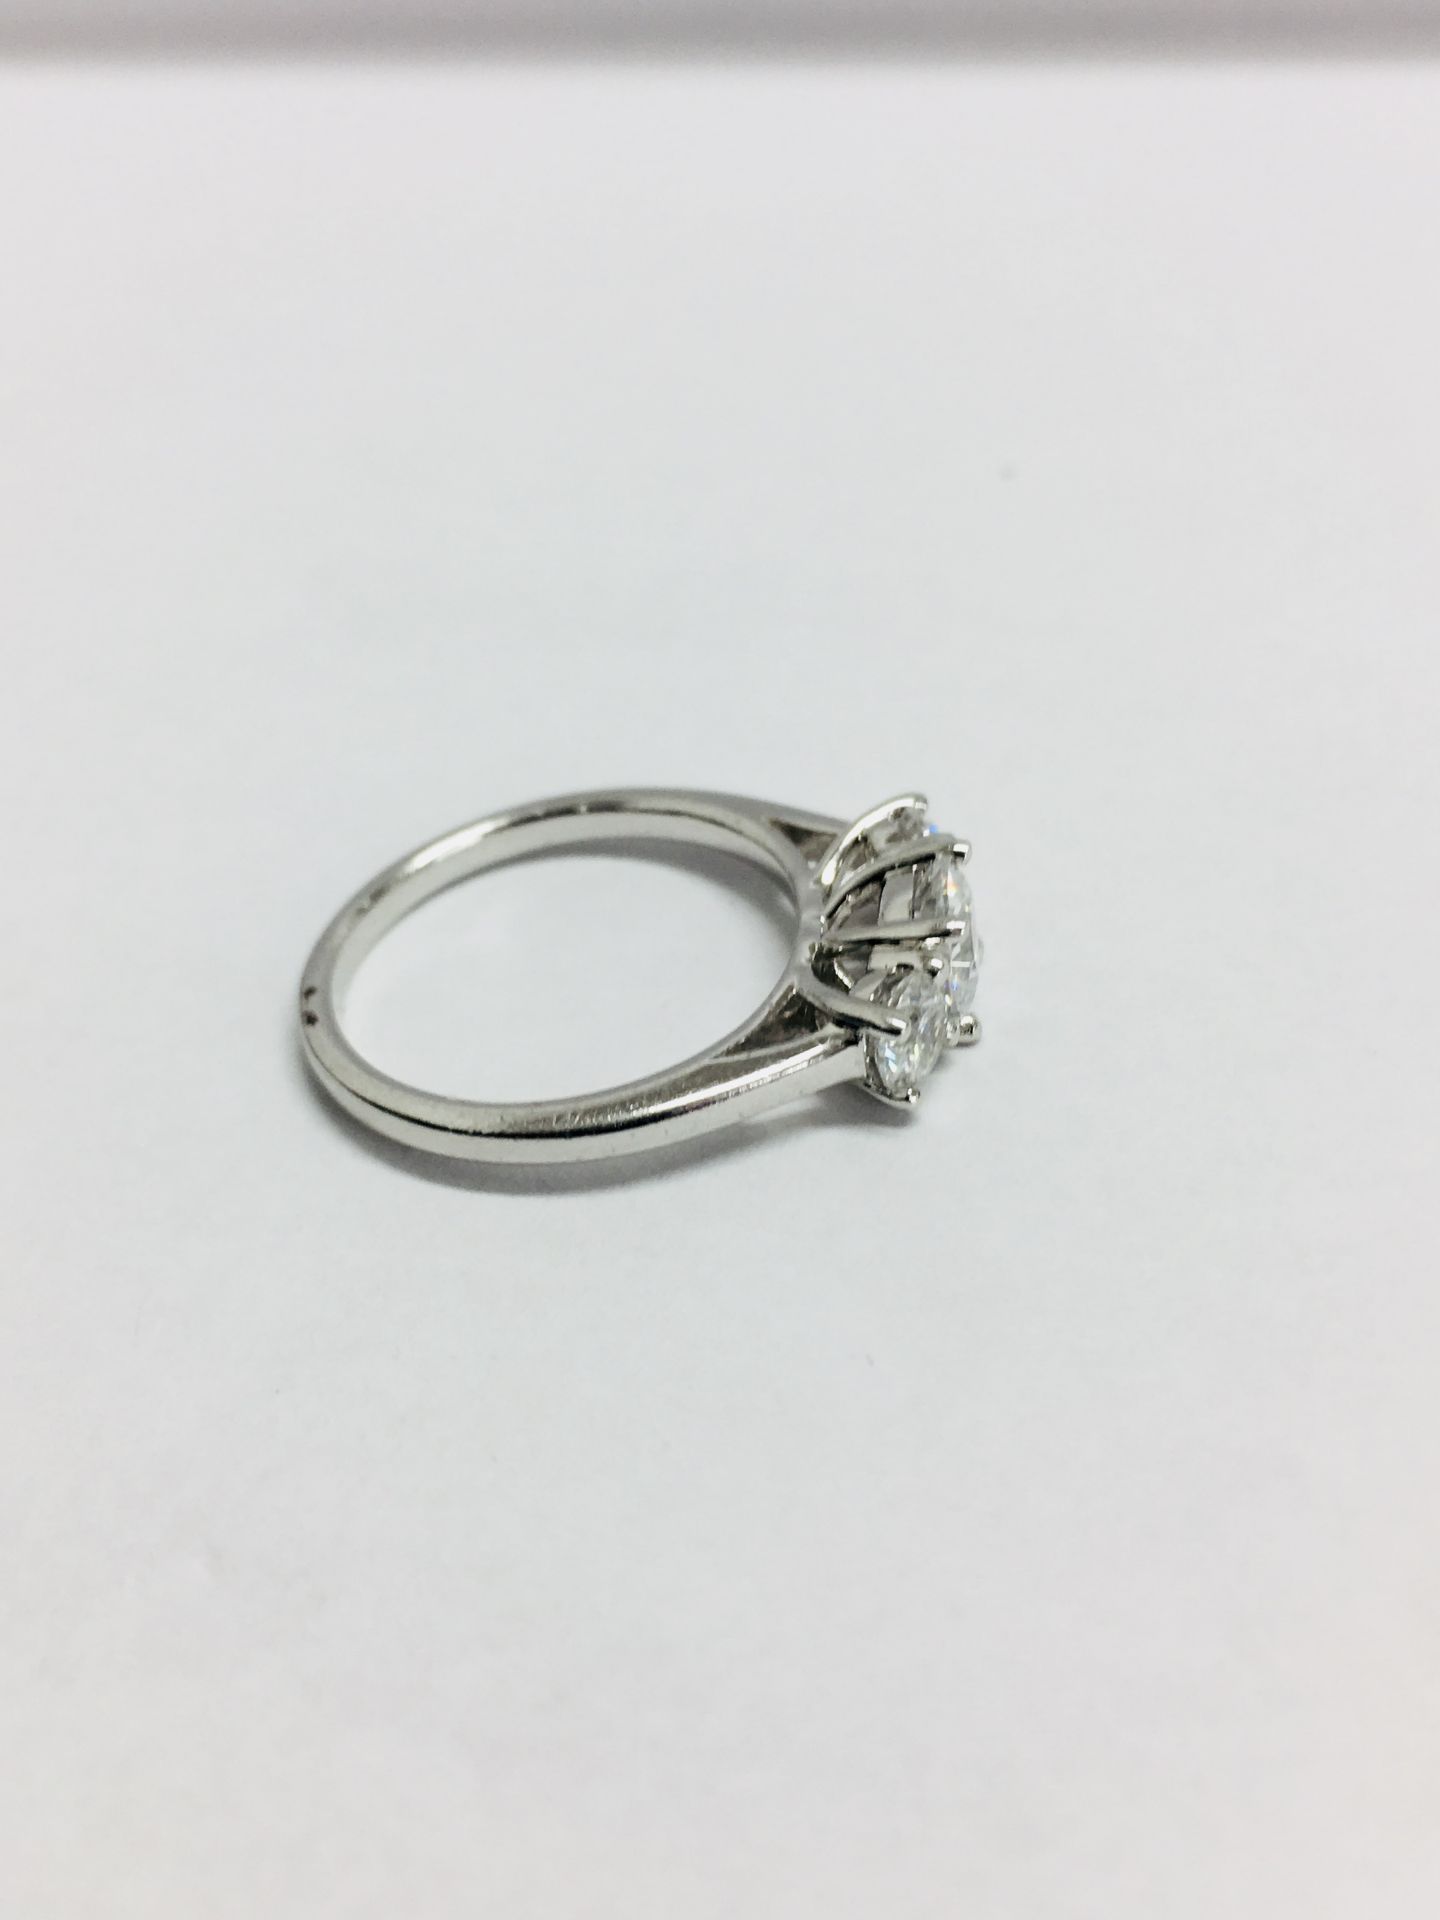 Platinum diamond three stone ring,centre stone 1ct cushion h colour vs clarity,excellent ut and - Image 4 of 4